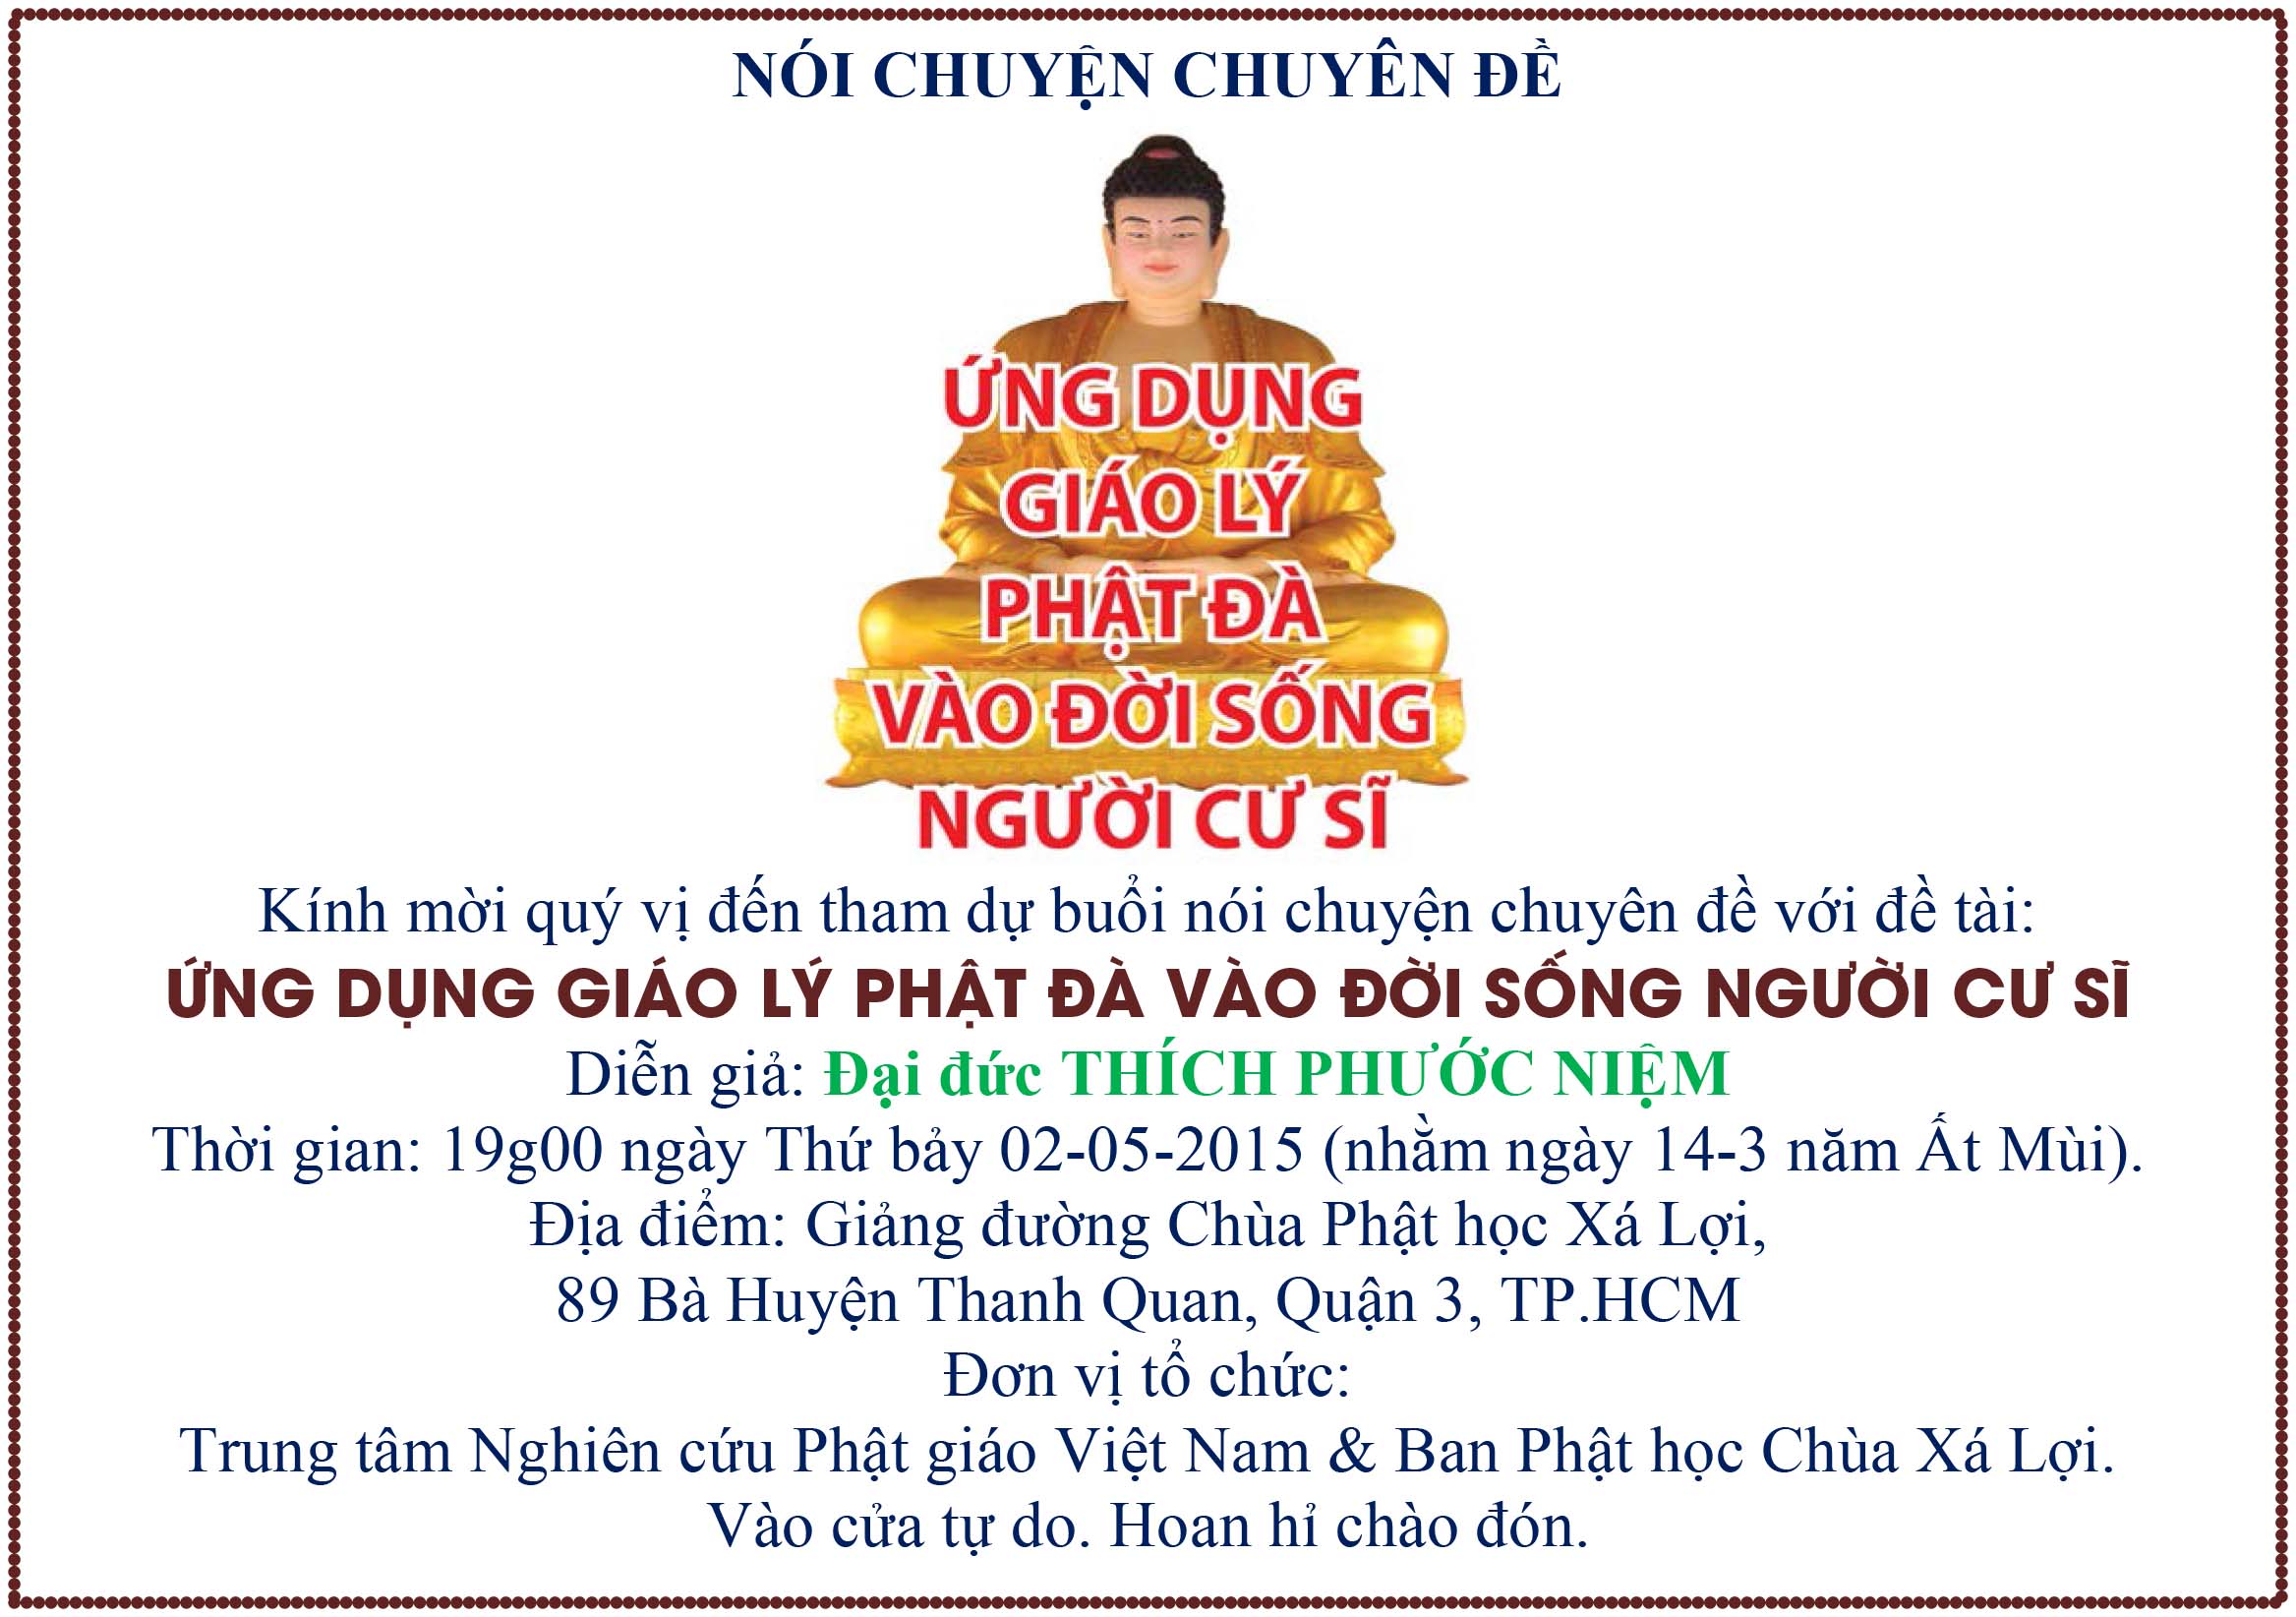 Noi chuyen chuyen de hang thang 05-2015 post